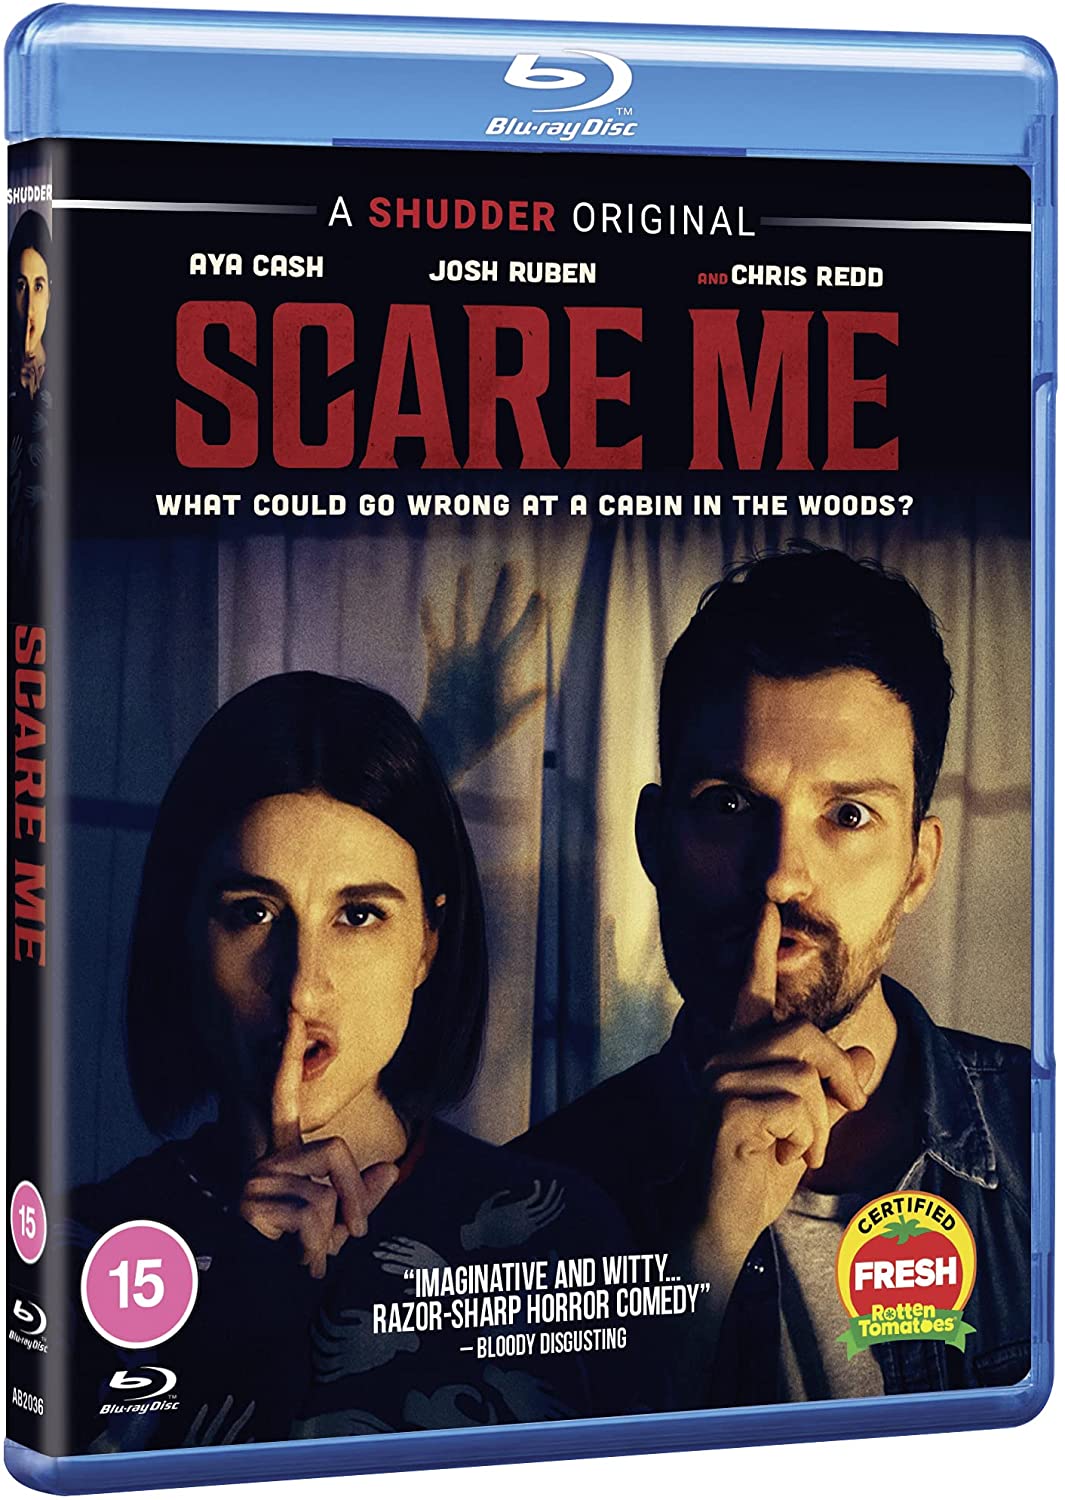 Scare Me (SHUDDER) [2020] – Horror [Blu-ray]